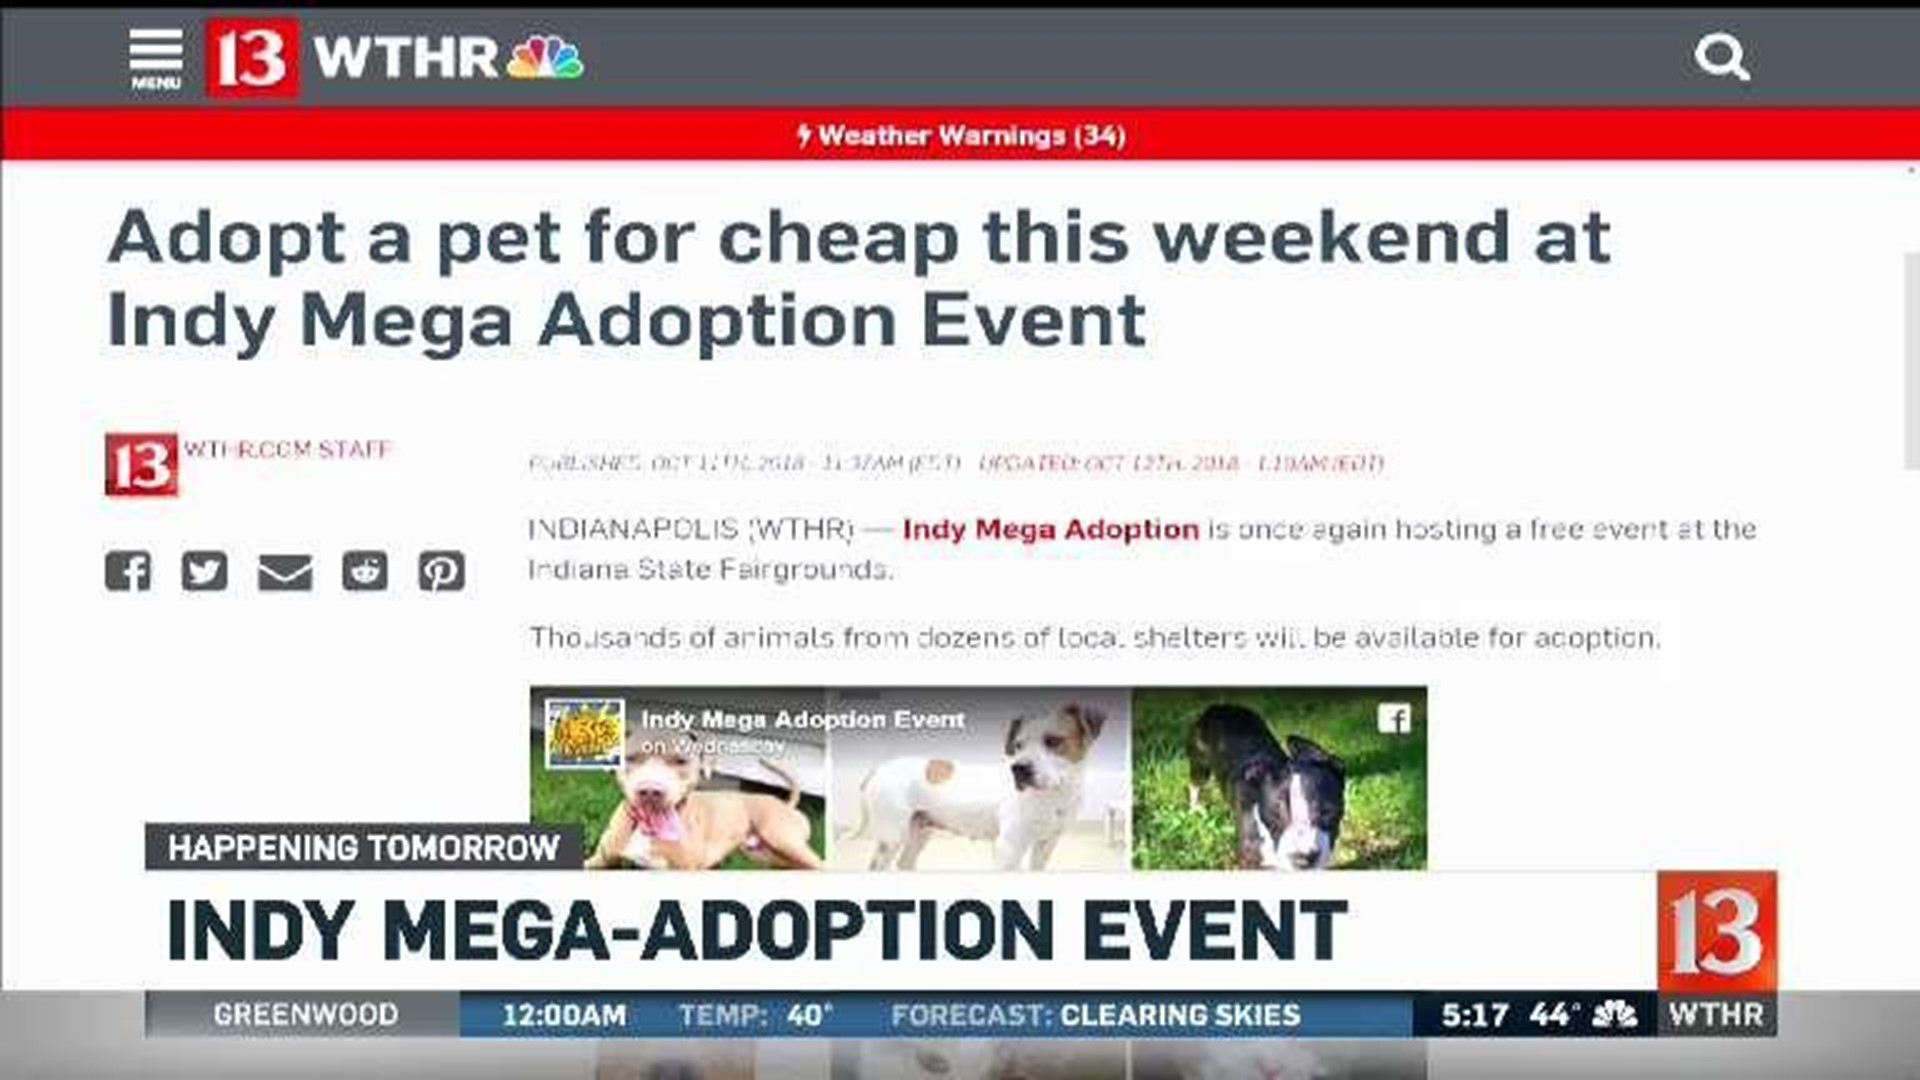 Indy Mega Adoption event starts Saturday at noon